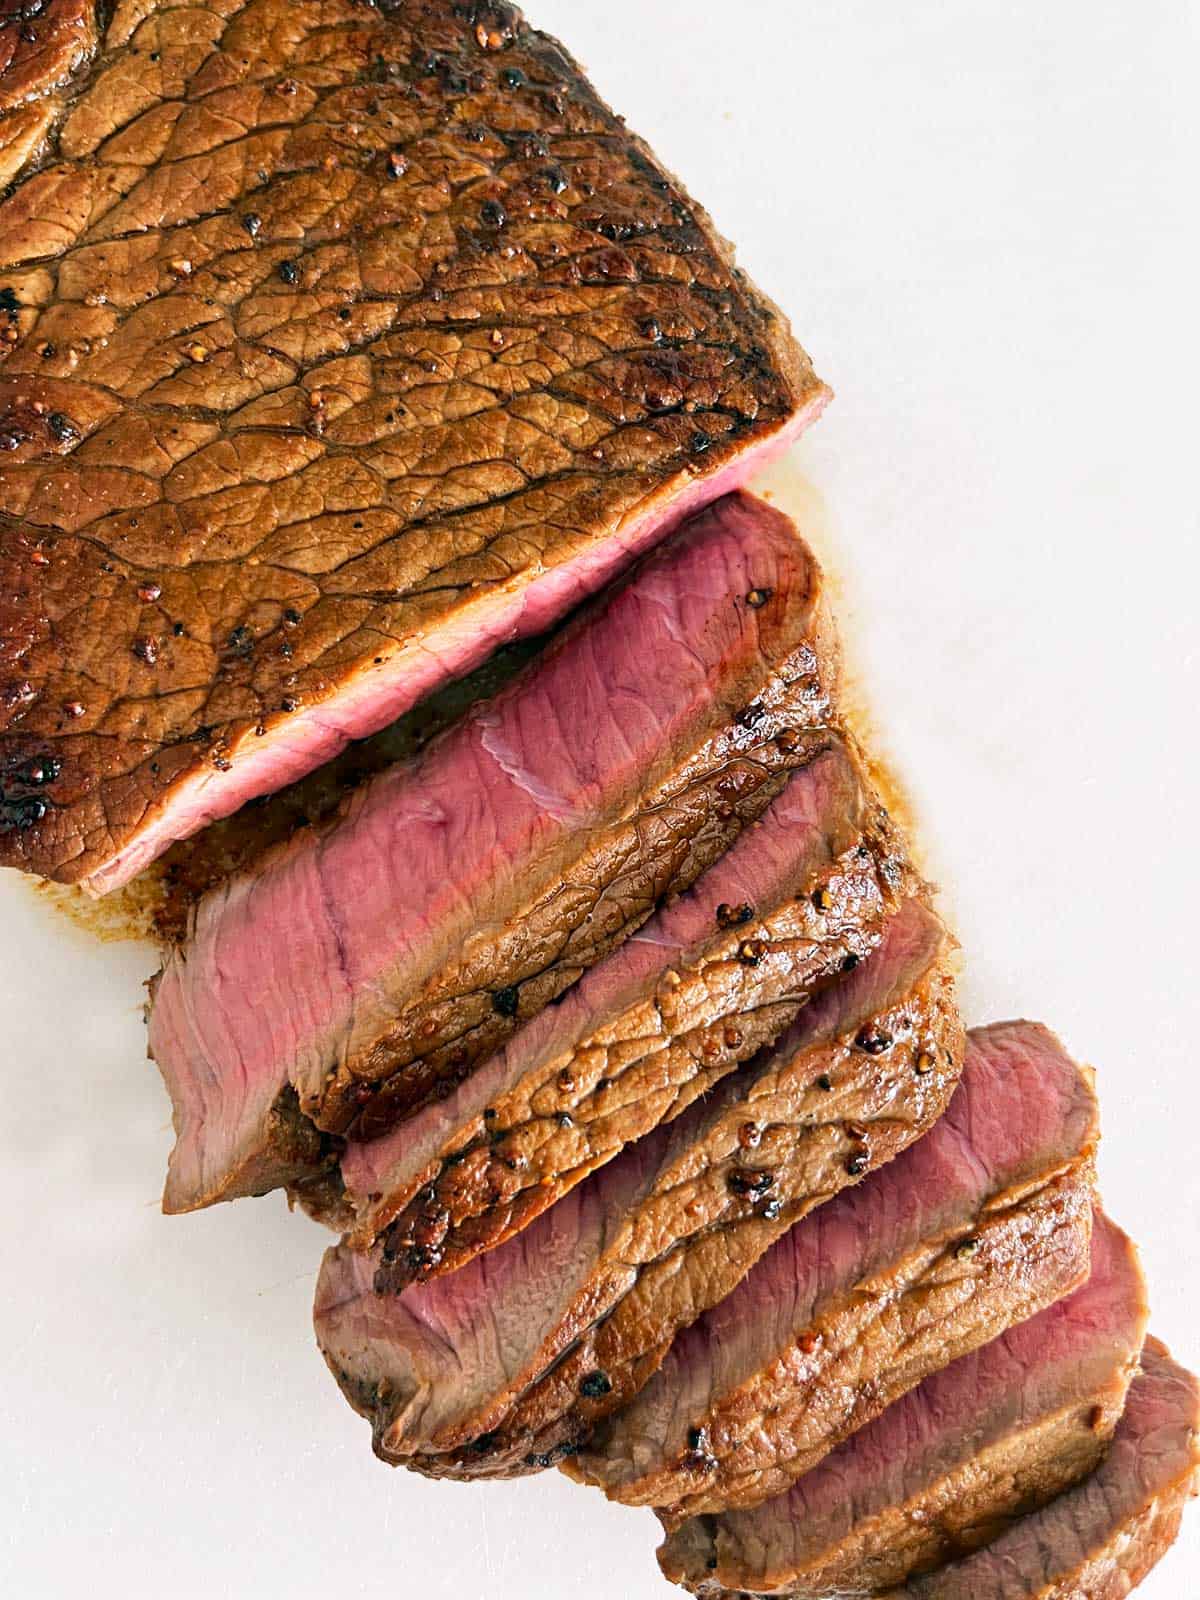 A sliced London broil steak on a cutting board.